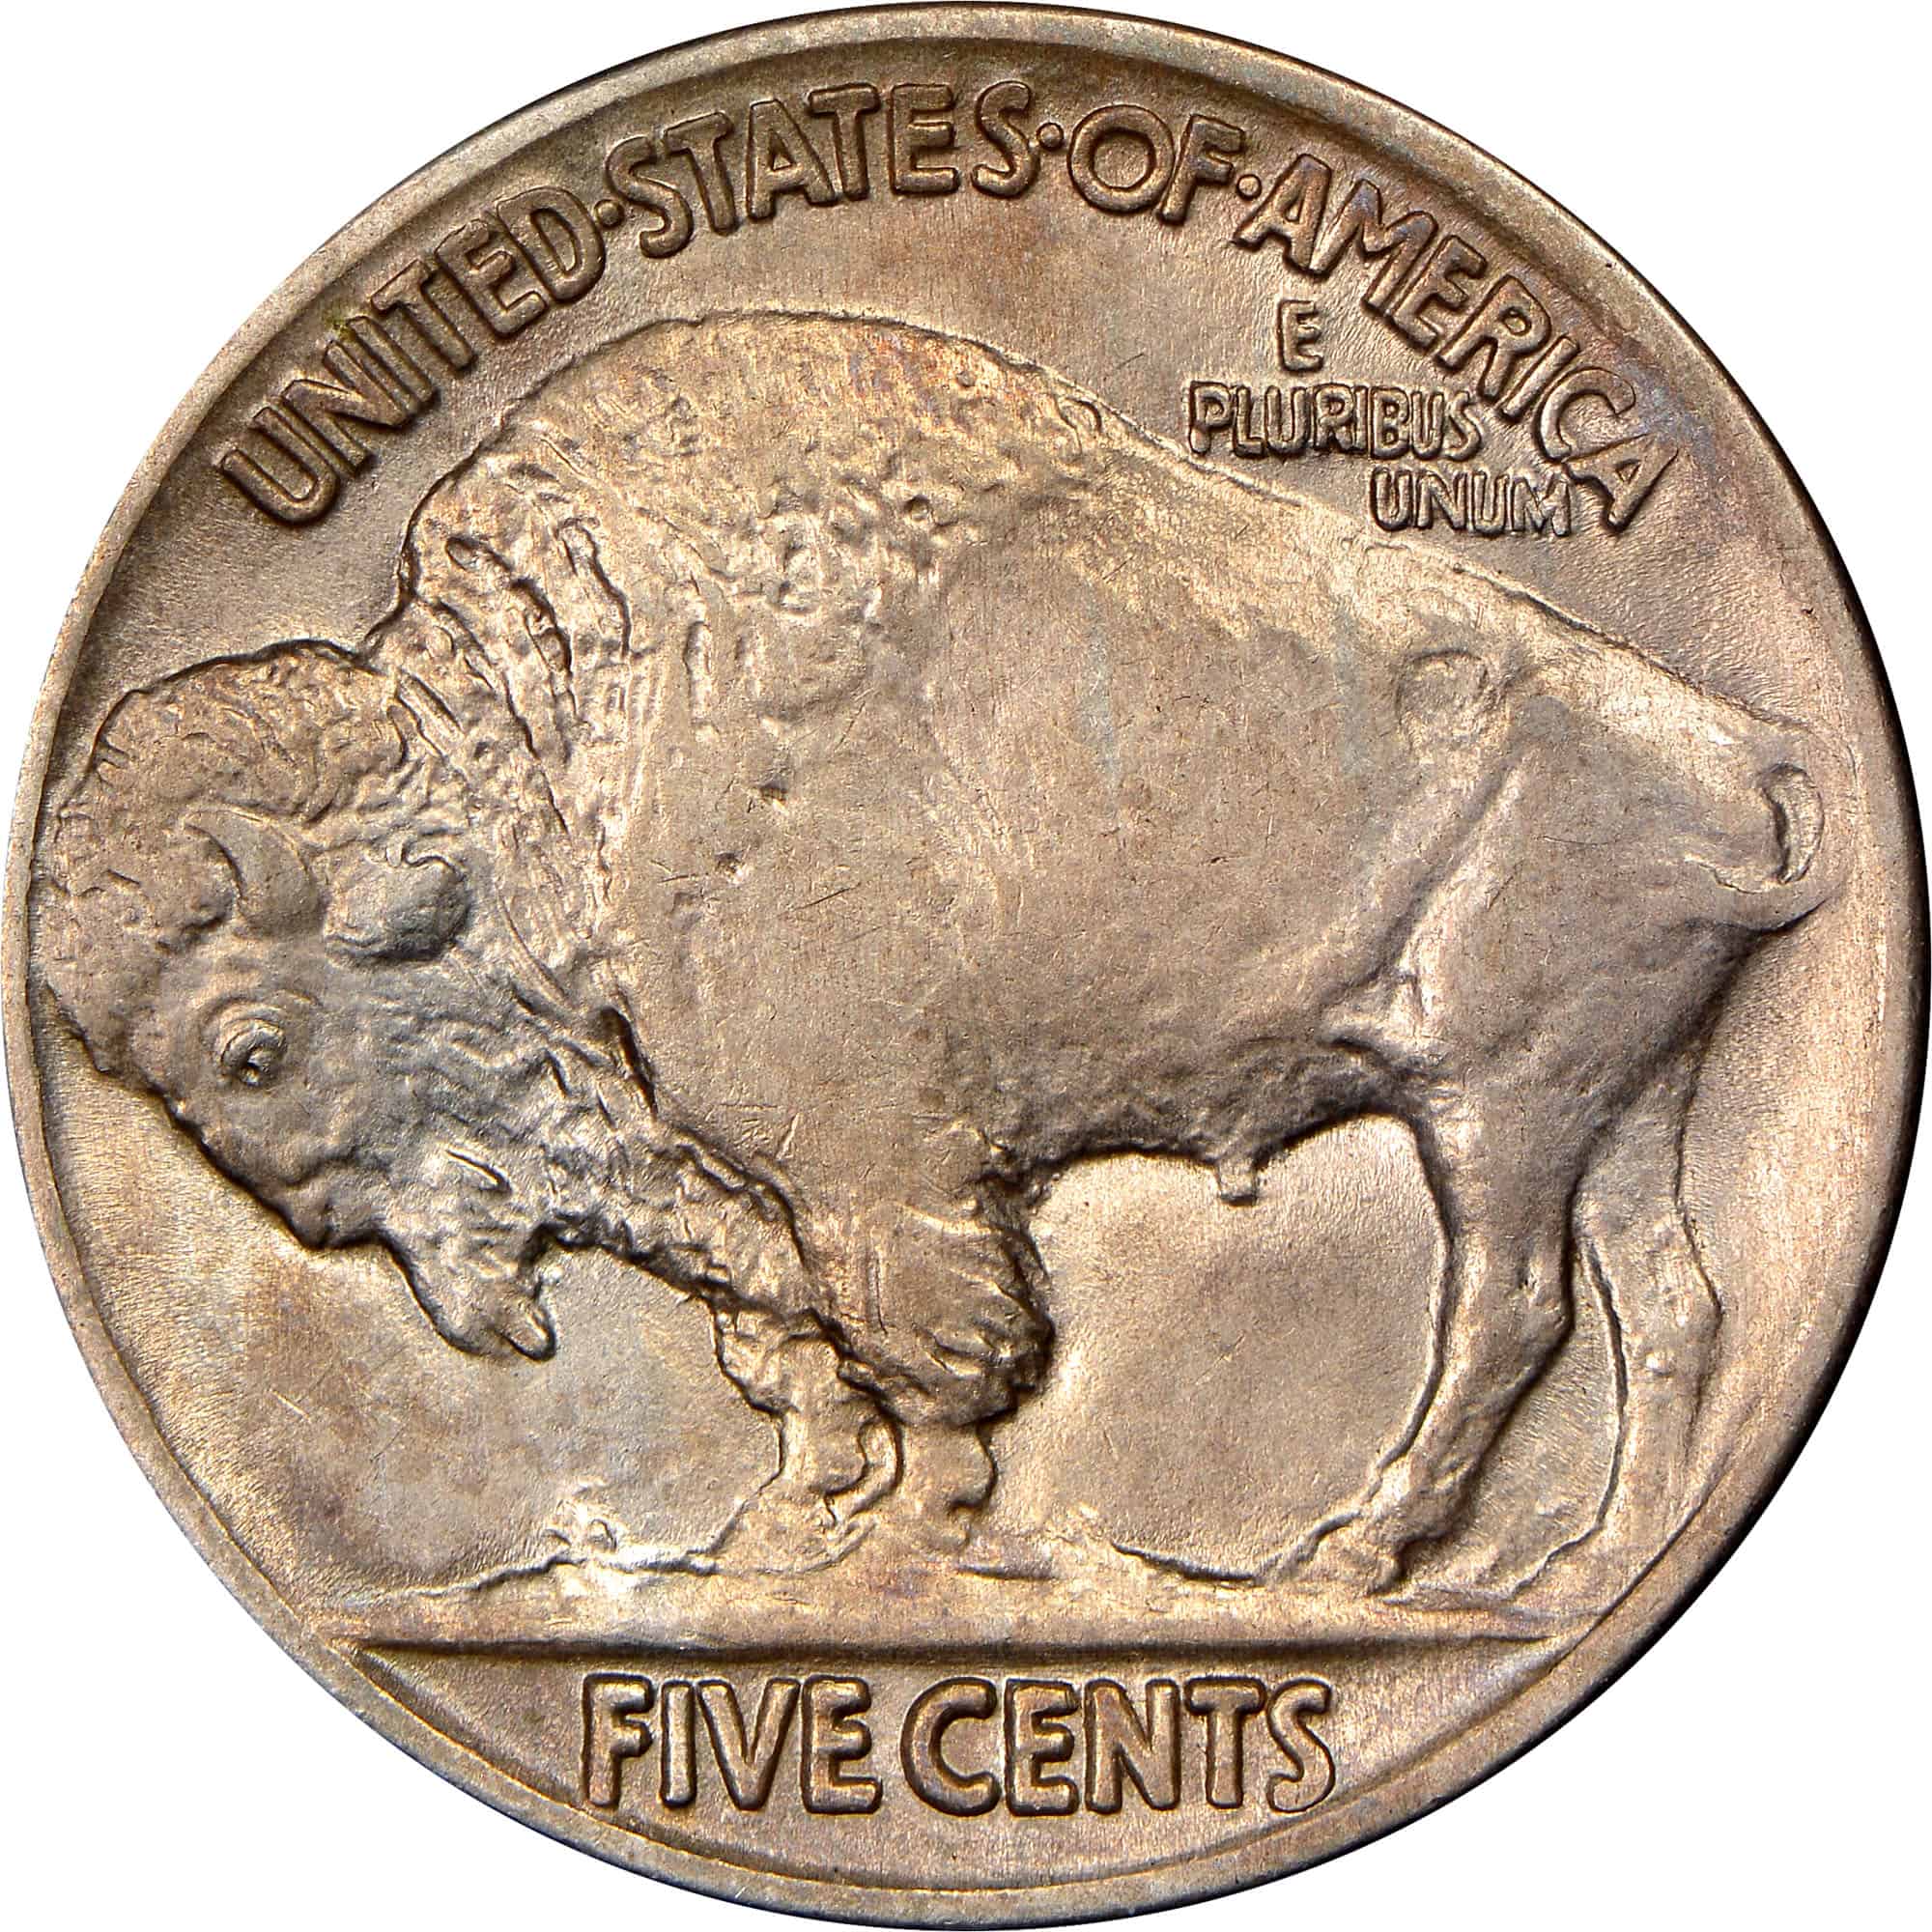 The reverse of the Buffalo nickel